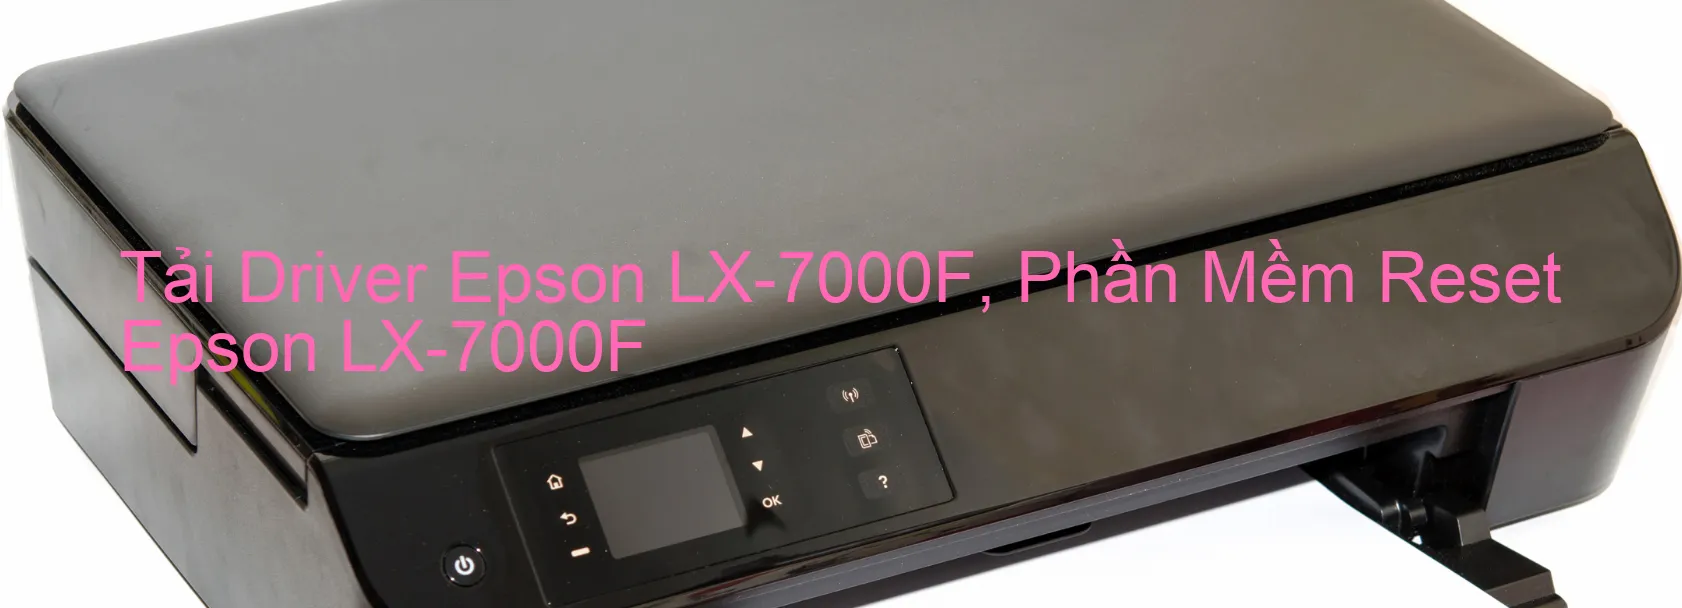 Driver Epson LX-7000F, Phần Mềm Reset Epson LX-7000F